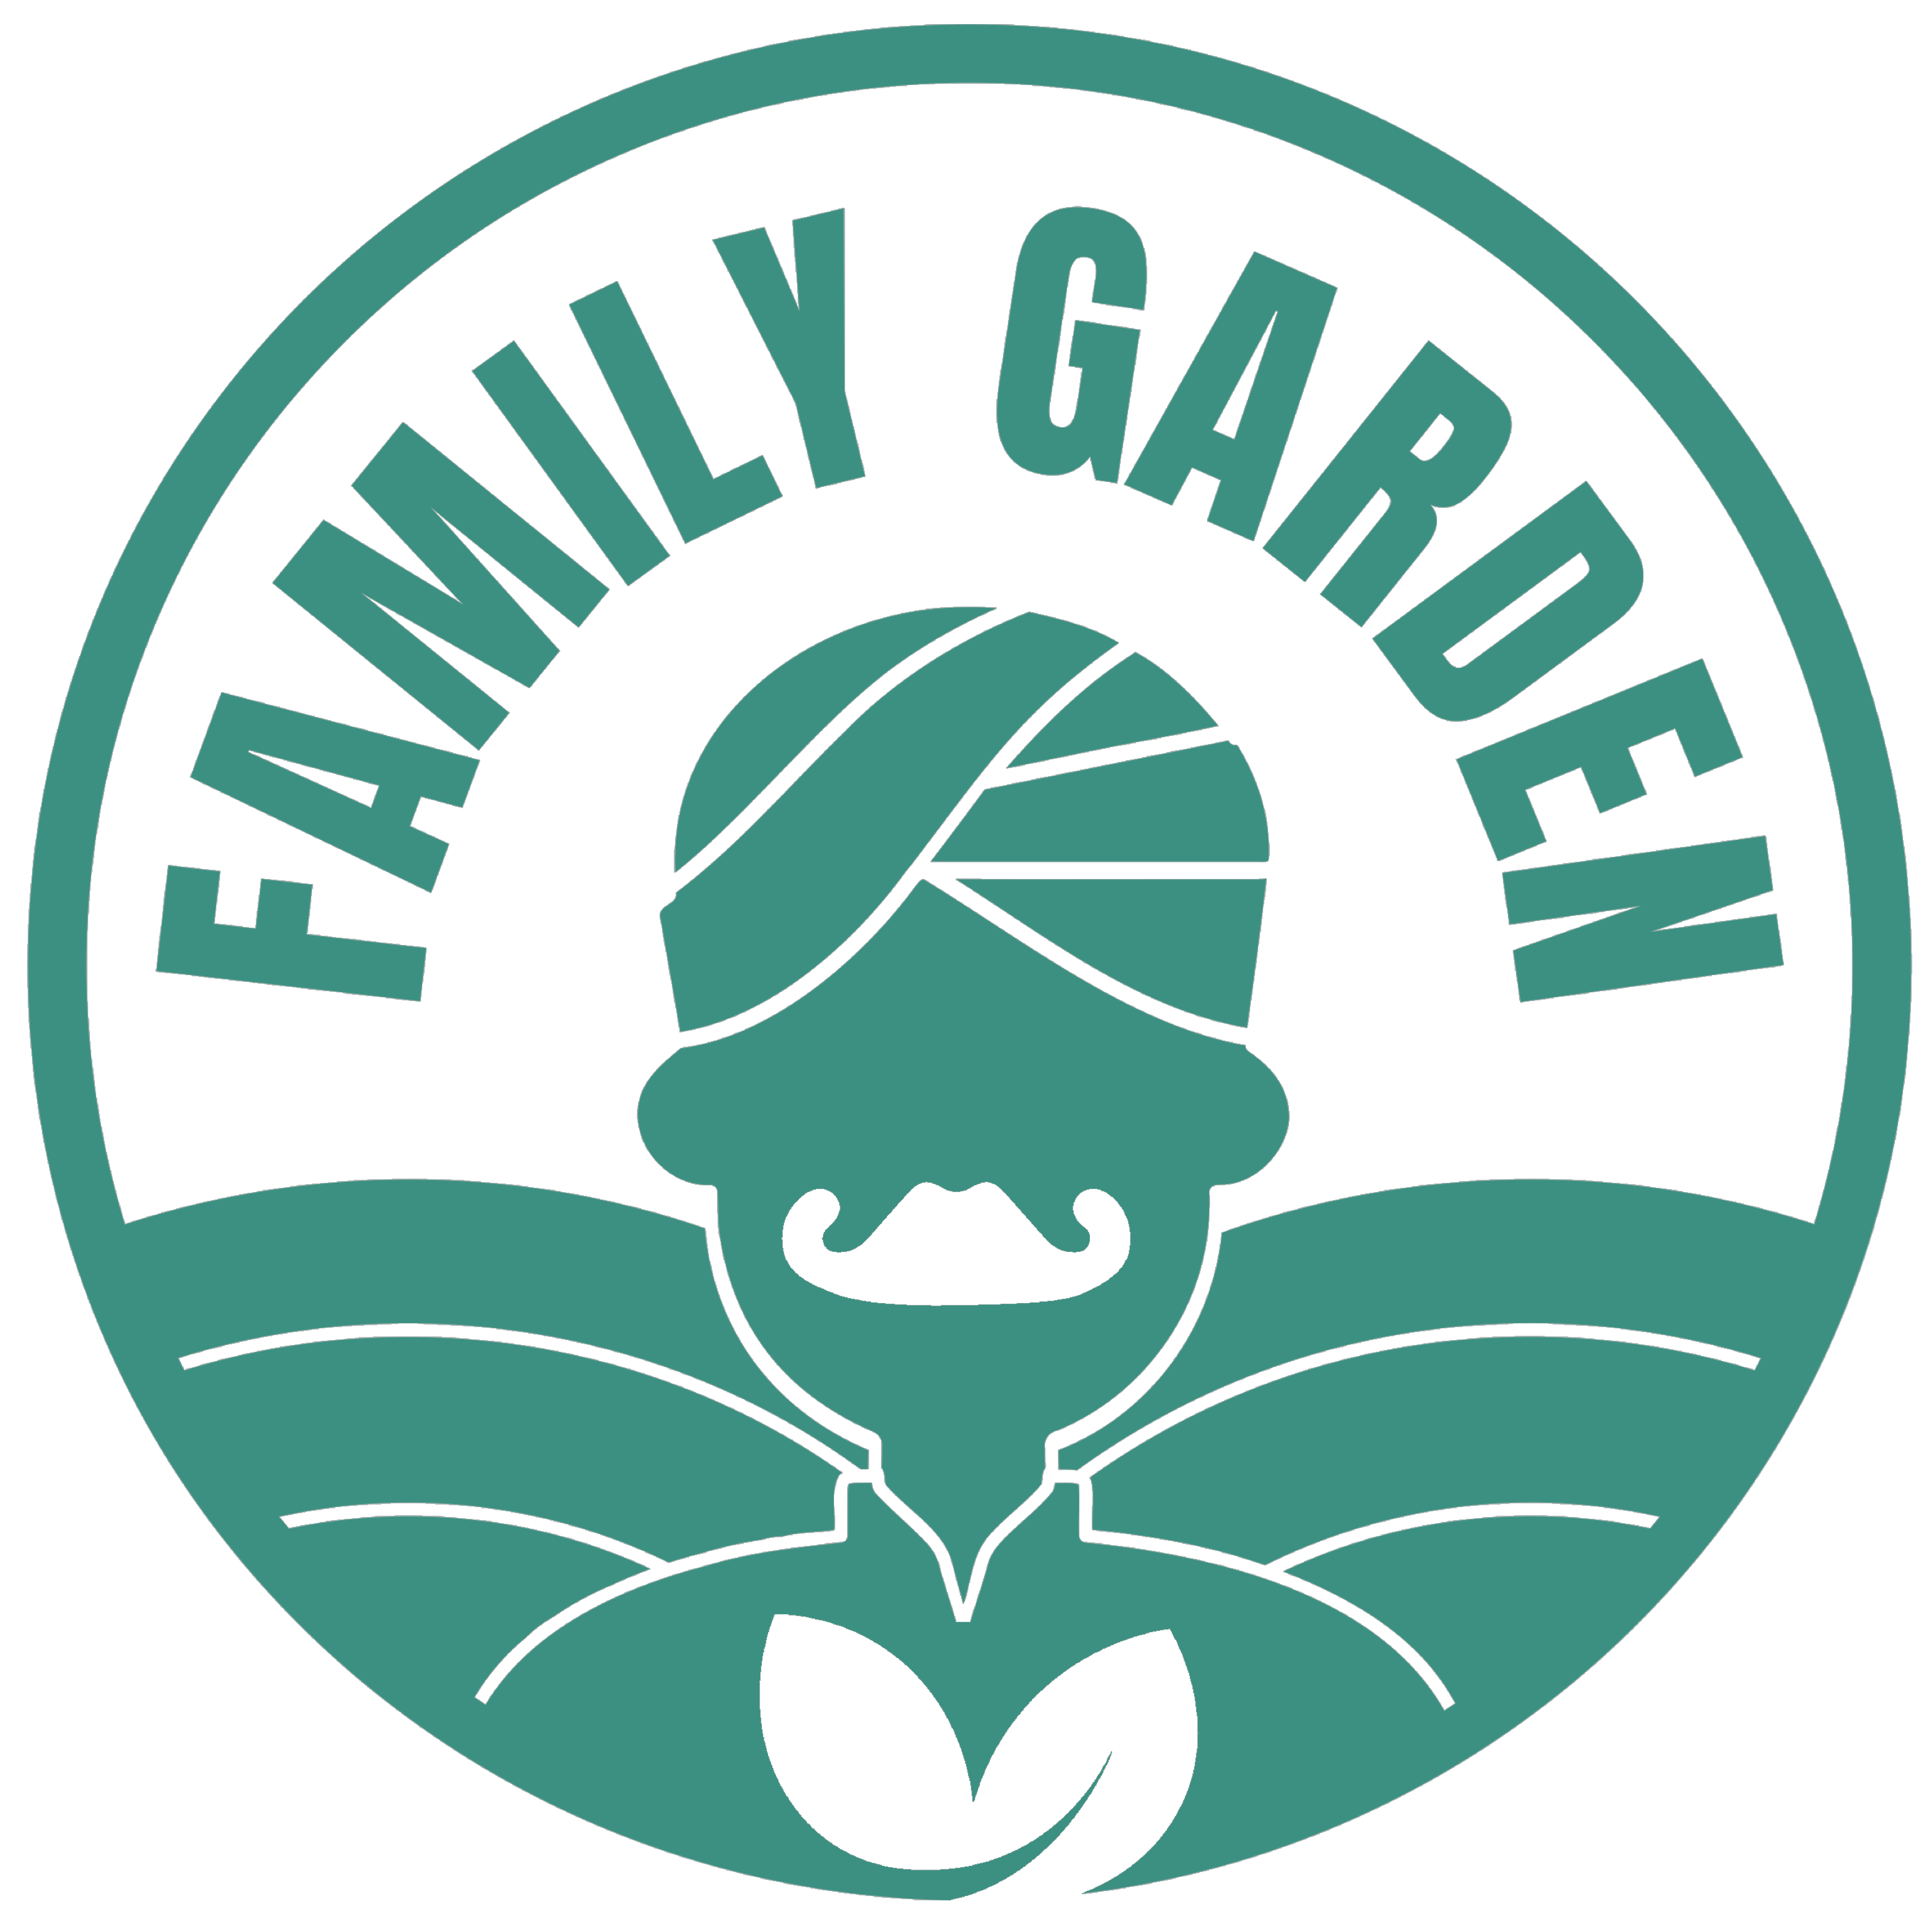 Family Garden